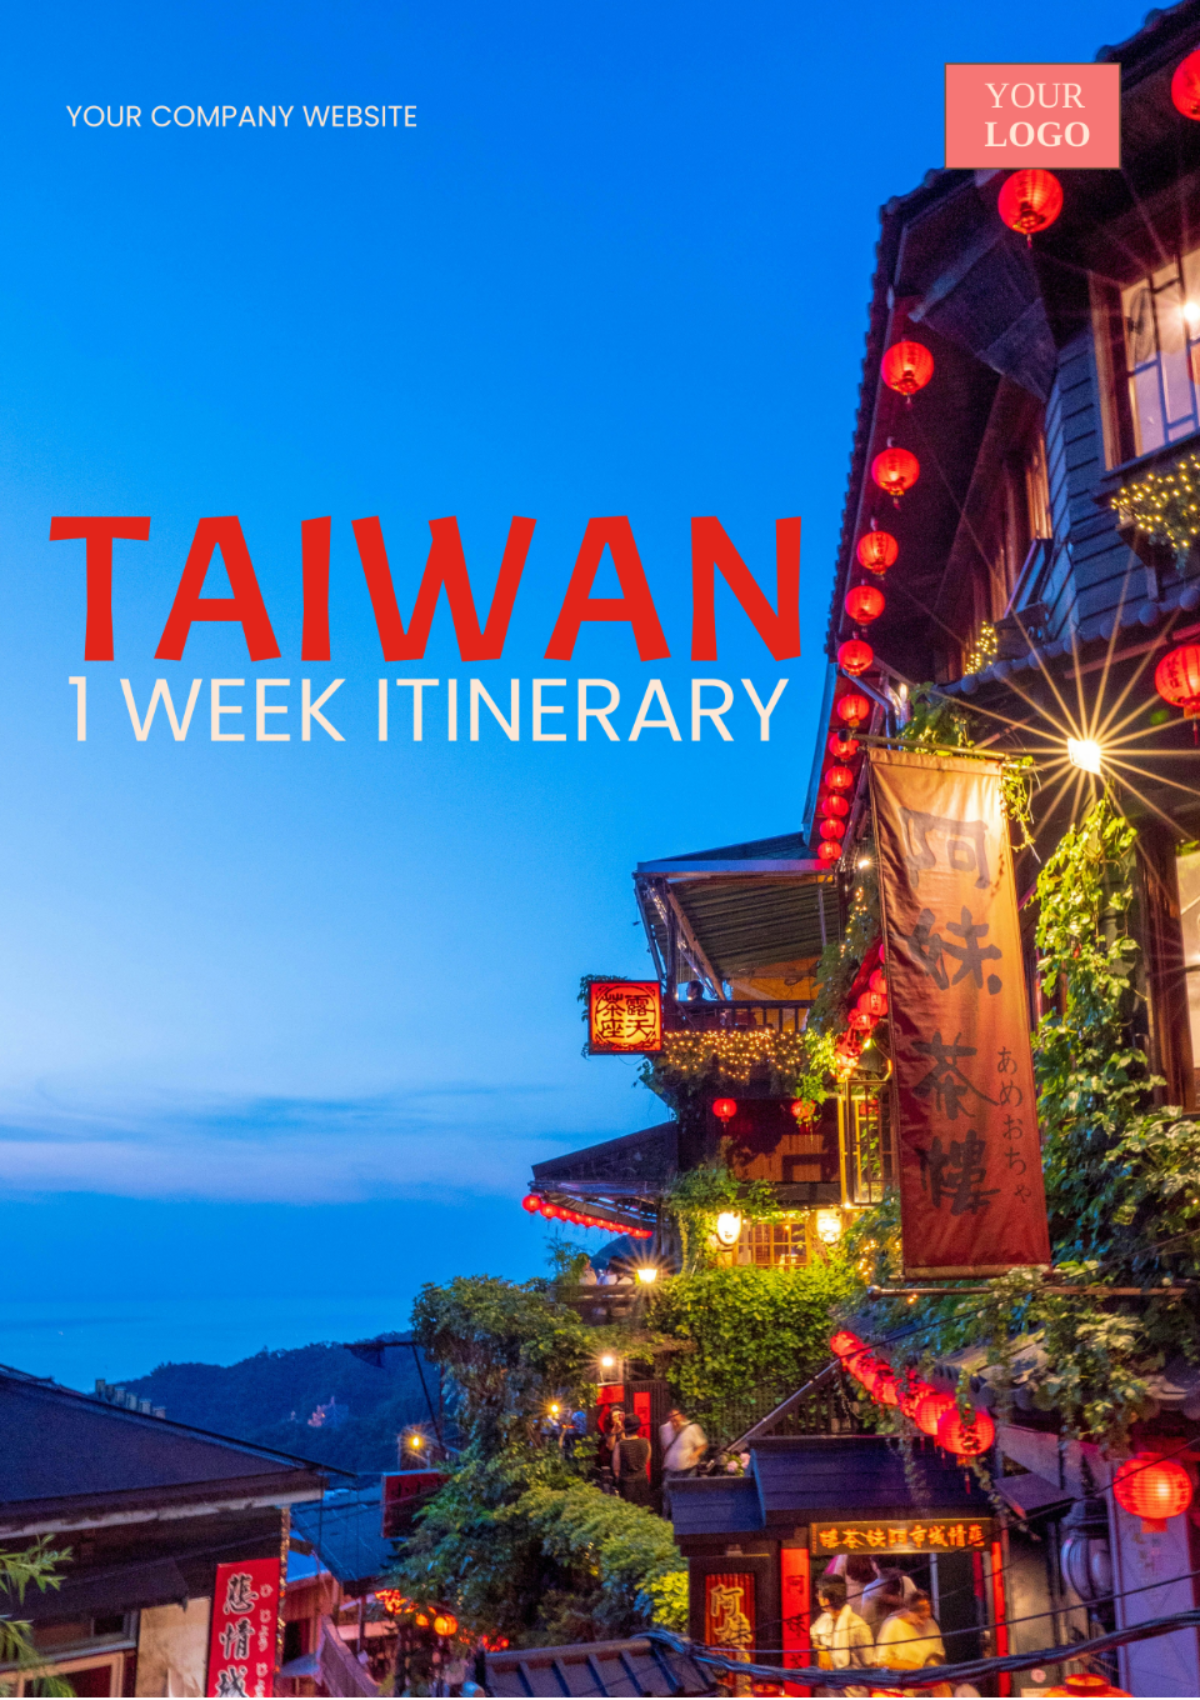 Free 1 Week Taiwan Itinerary Template